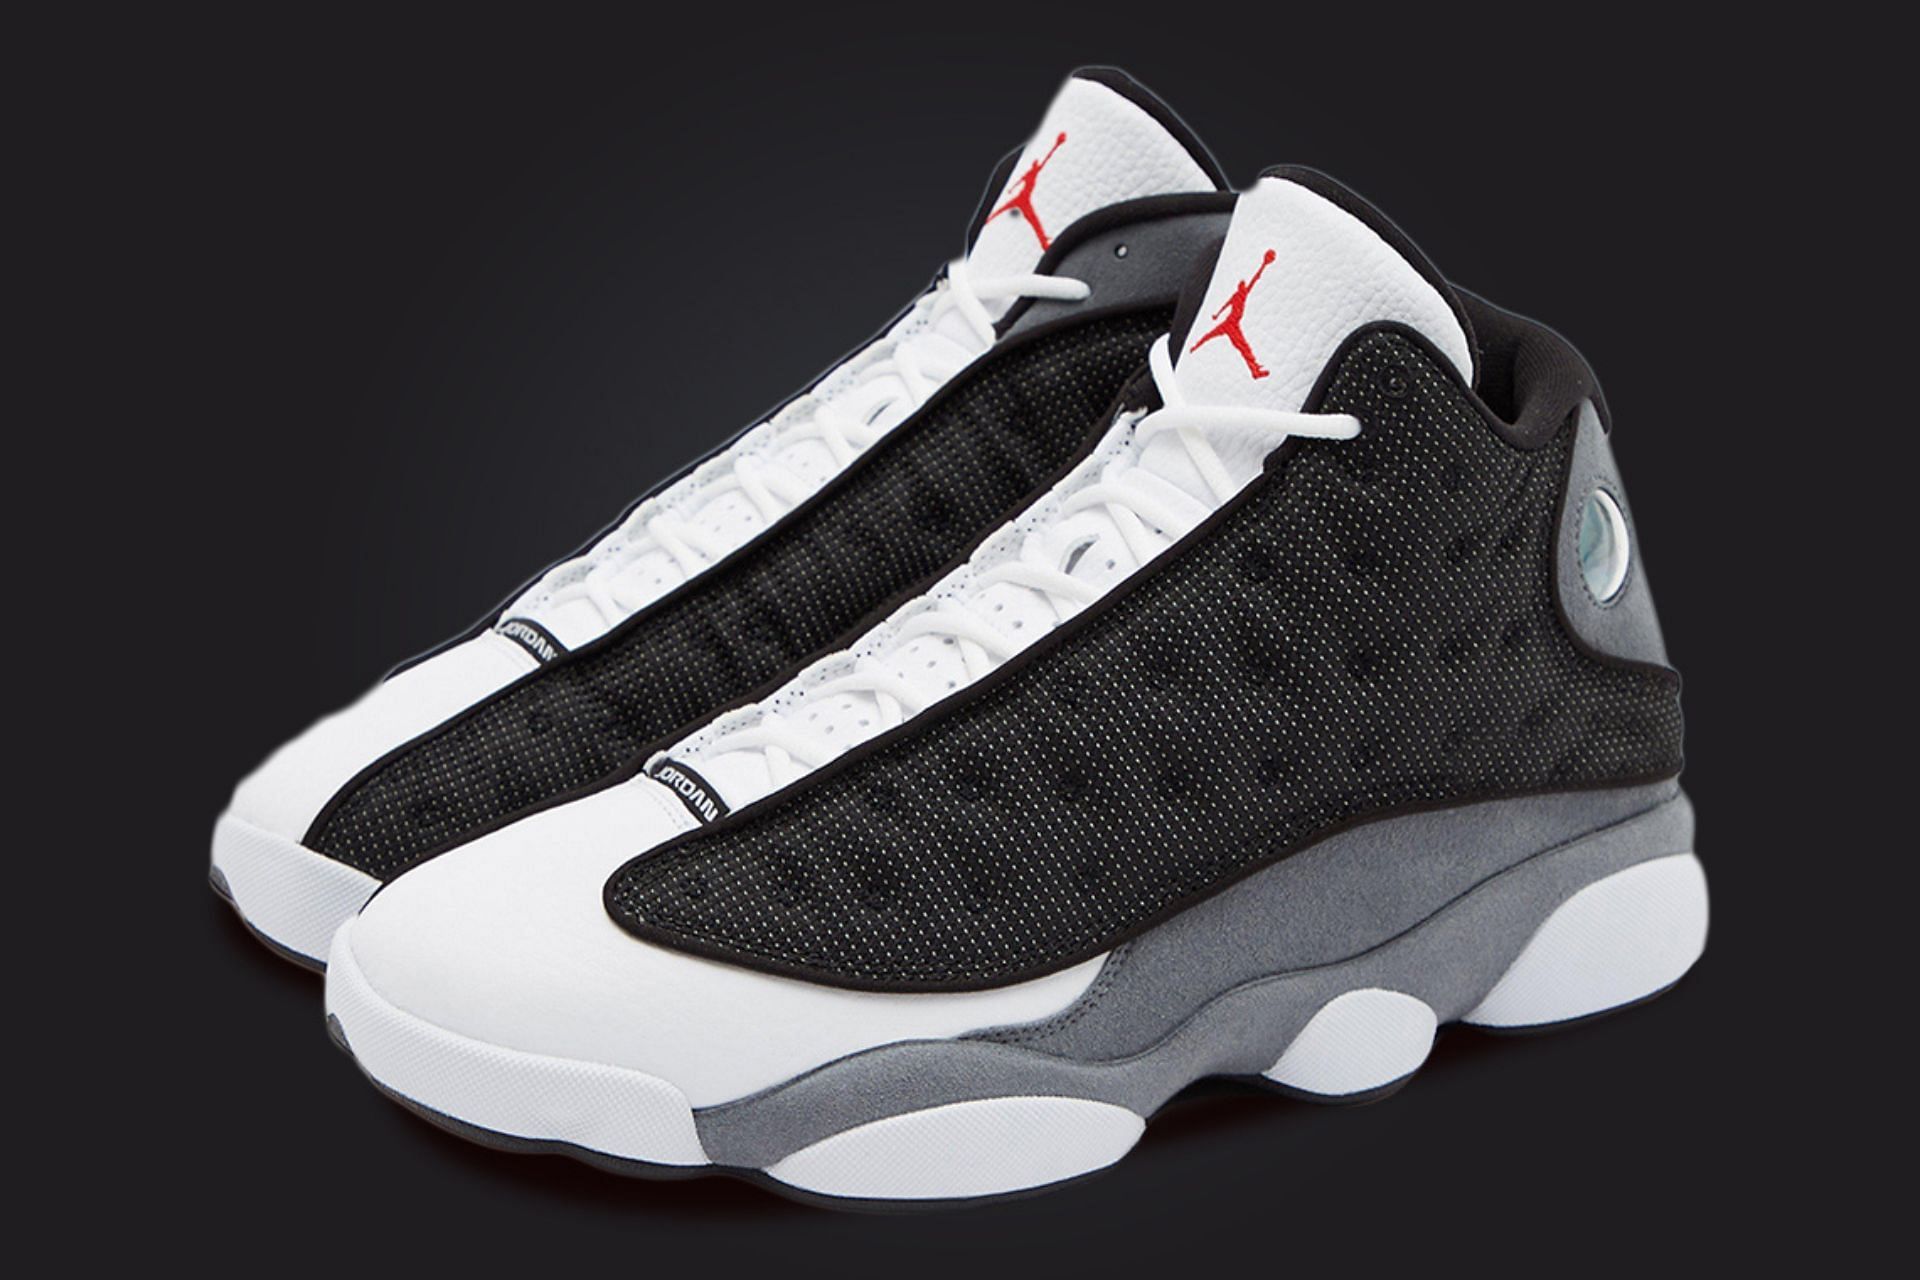 Nike Nike Air Jordan 13 “Black Flint” shoes Where to buy, price, and